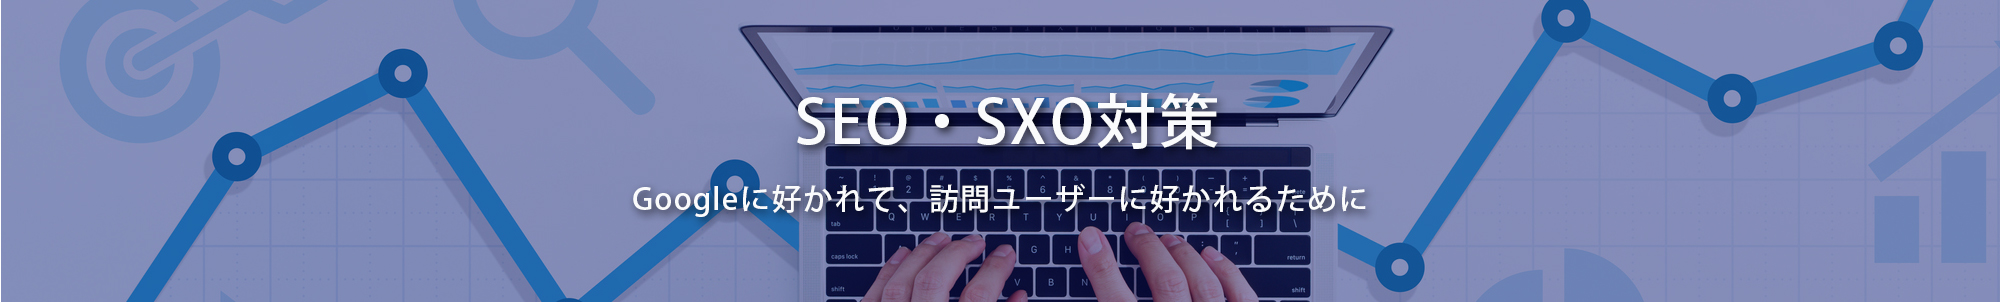 SEOSXO-01-01-00217_02